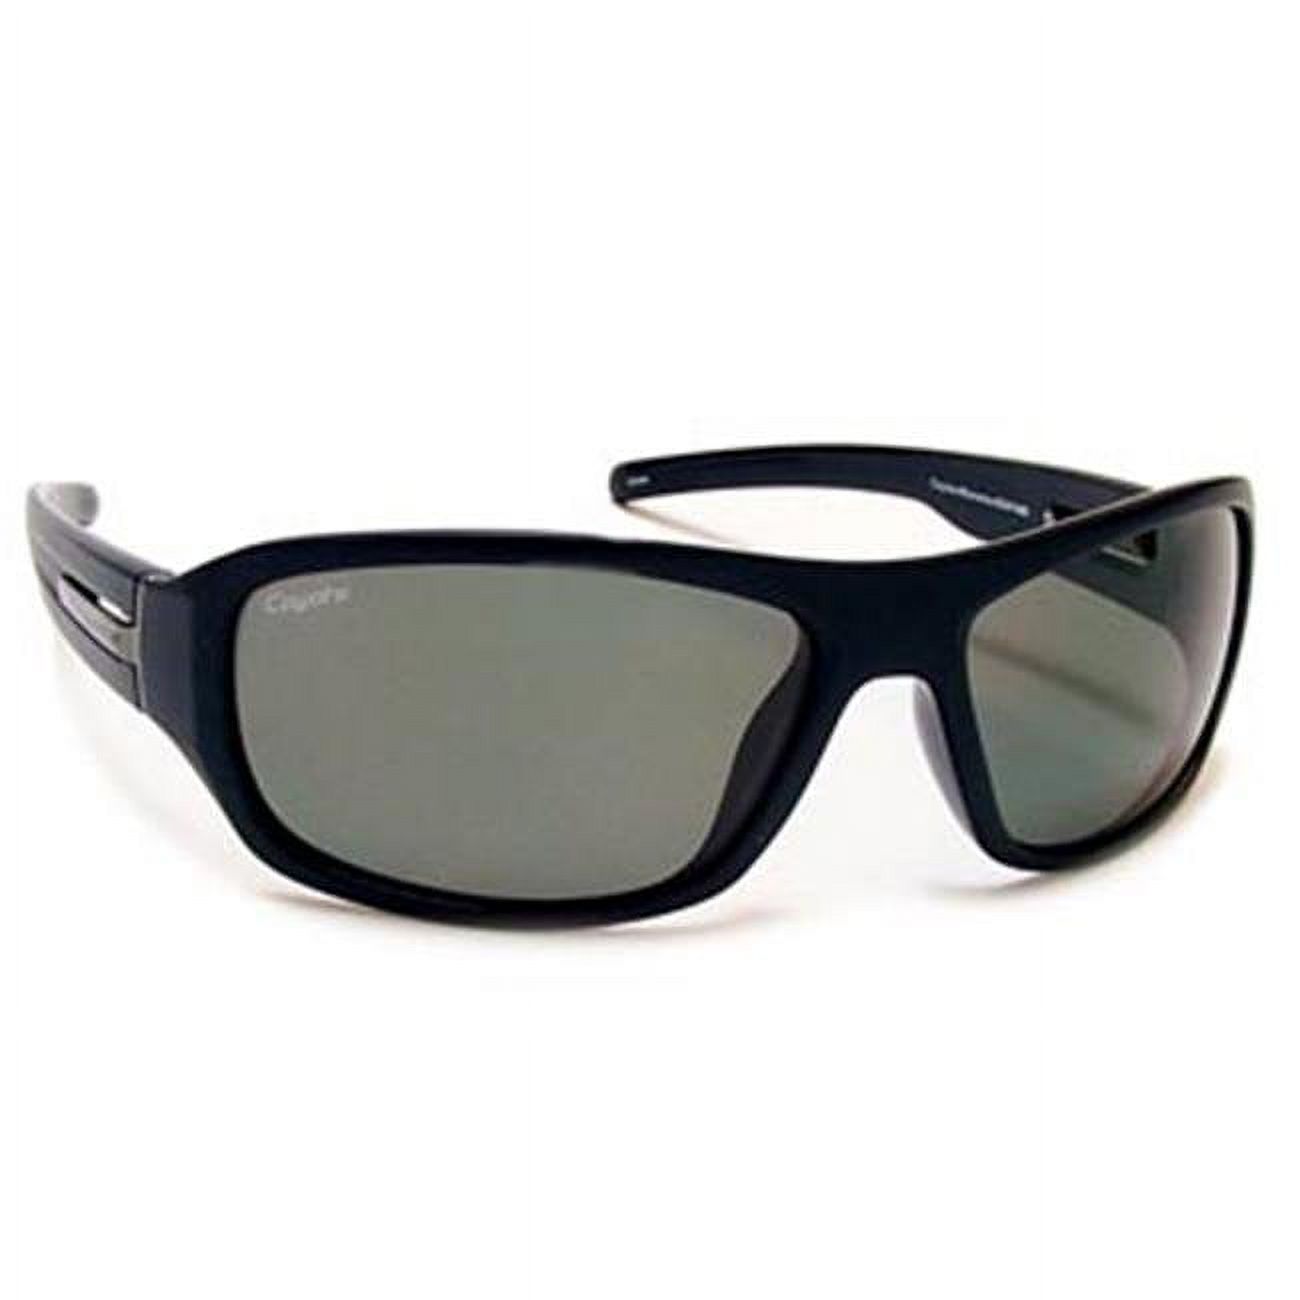 CoyoteVision Sonoma m. black-gray Sonoma Performance Polarized Sunglasses - image 1 of 4